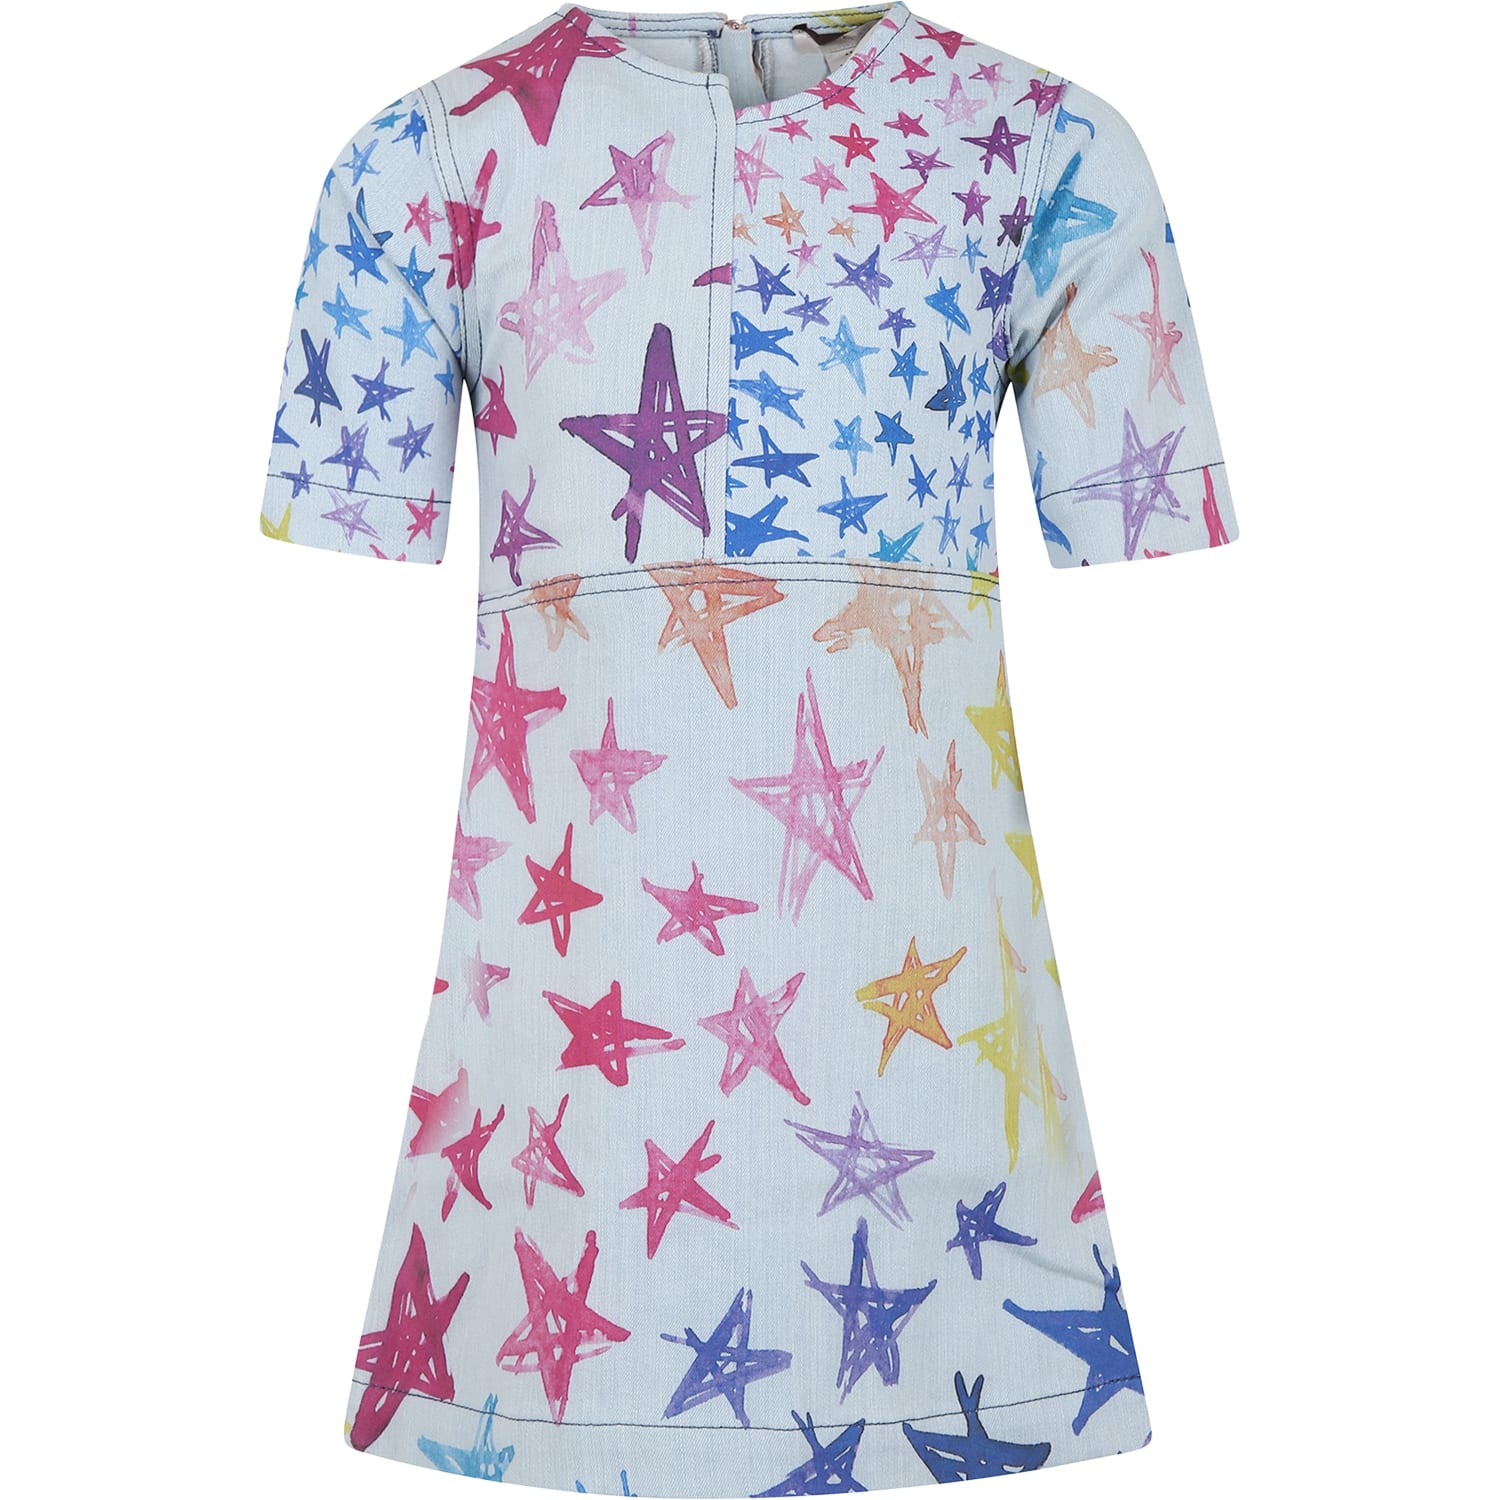 STELLA MCCARTNEY LIGHT BLUE DRESS FOR GIRL WITH STARS PRINT